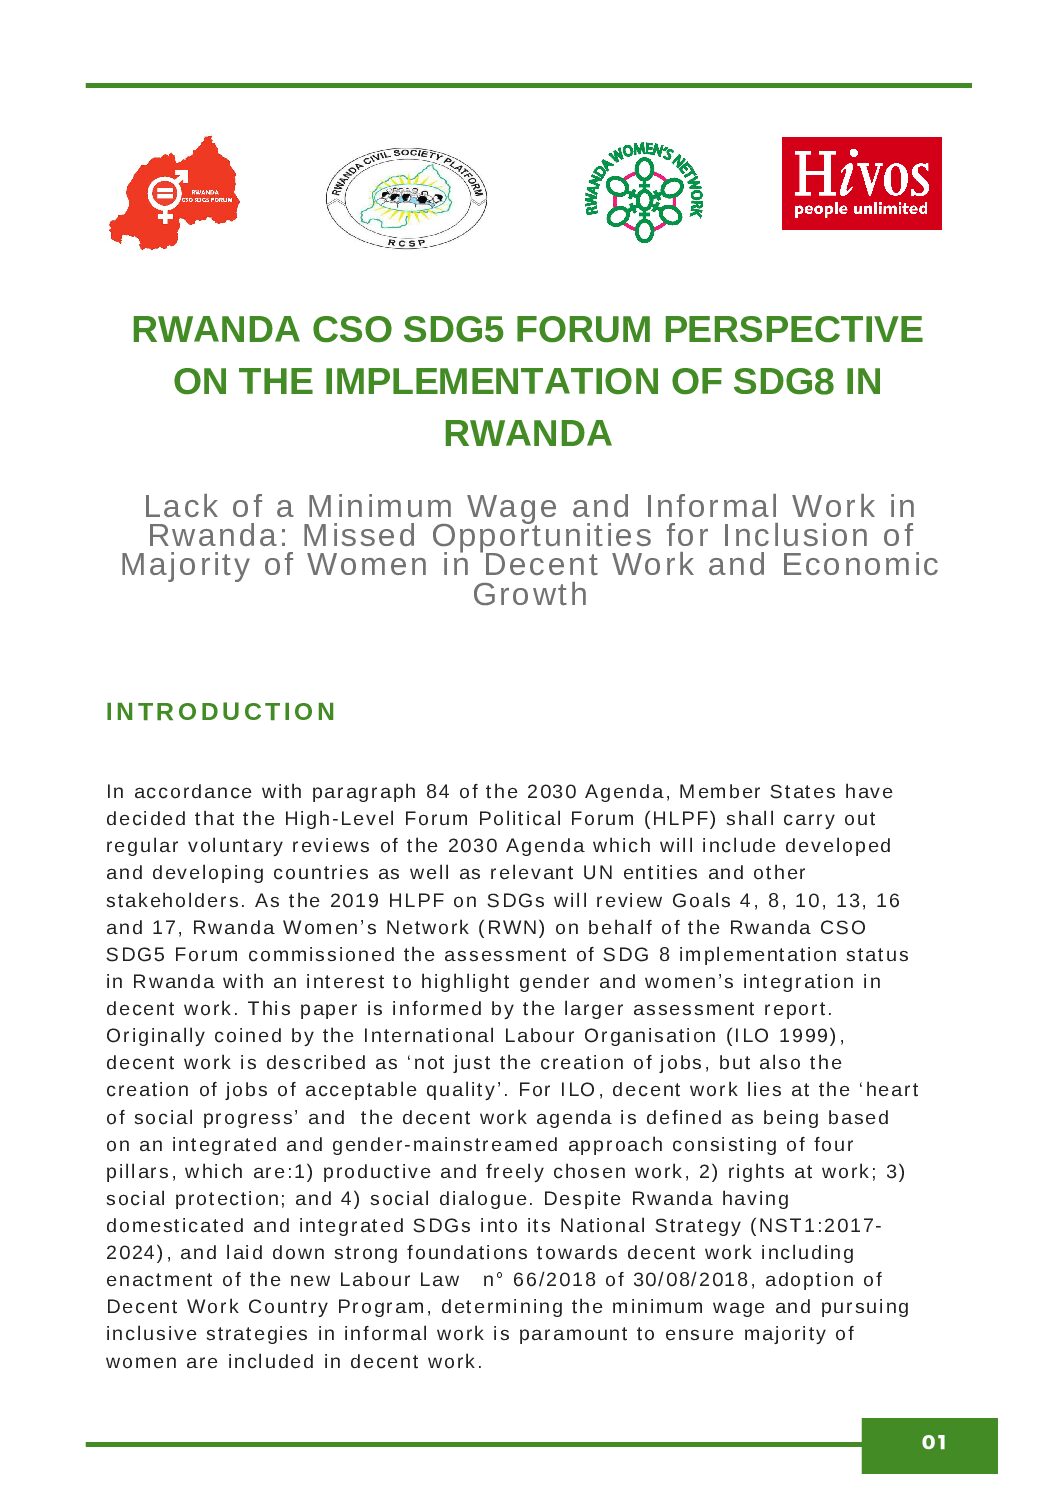 Rwanda CSO SDG5 Forum perspective on the implementation of SDG8 in Rwanda